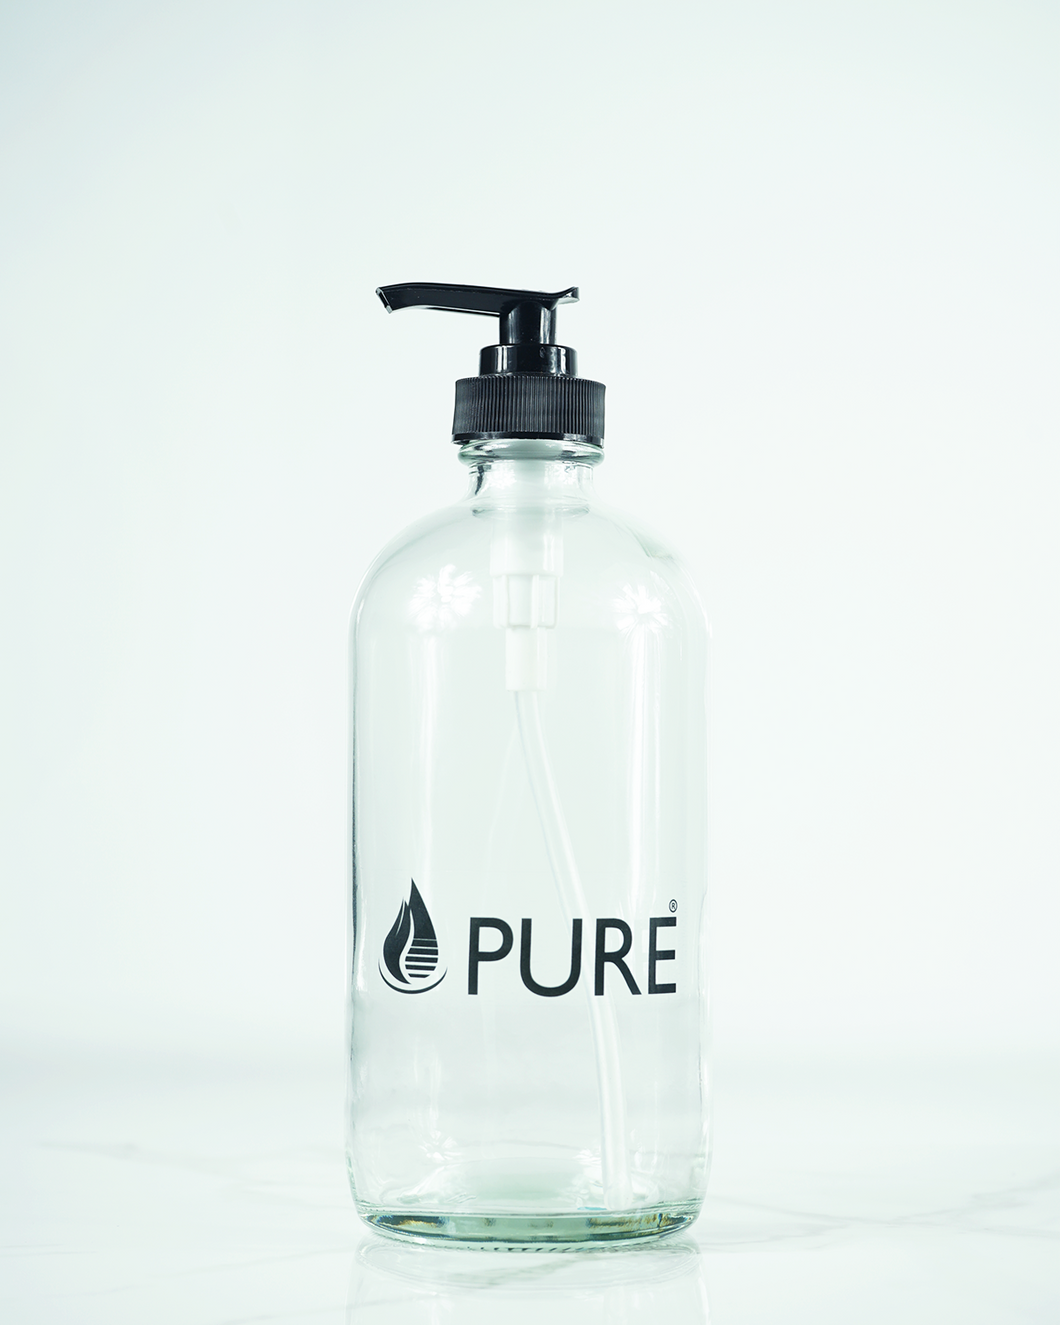 Purebio Glass Pump Bottle - 500 ml Empty